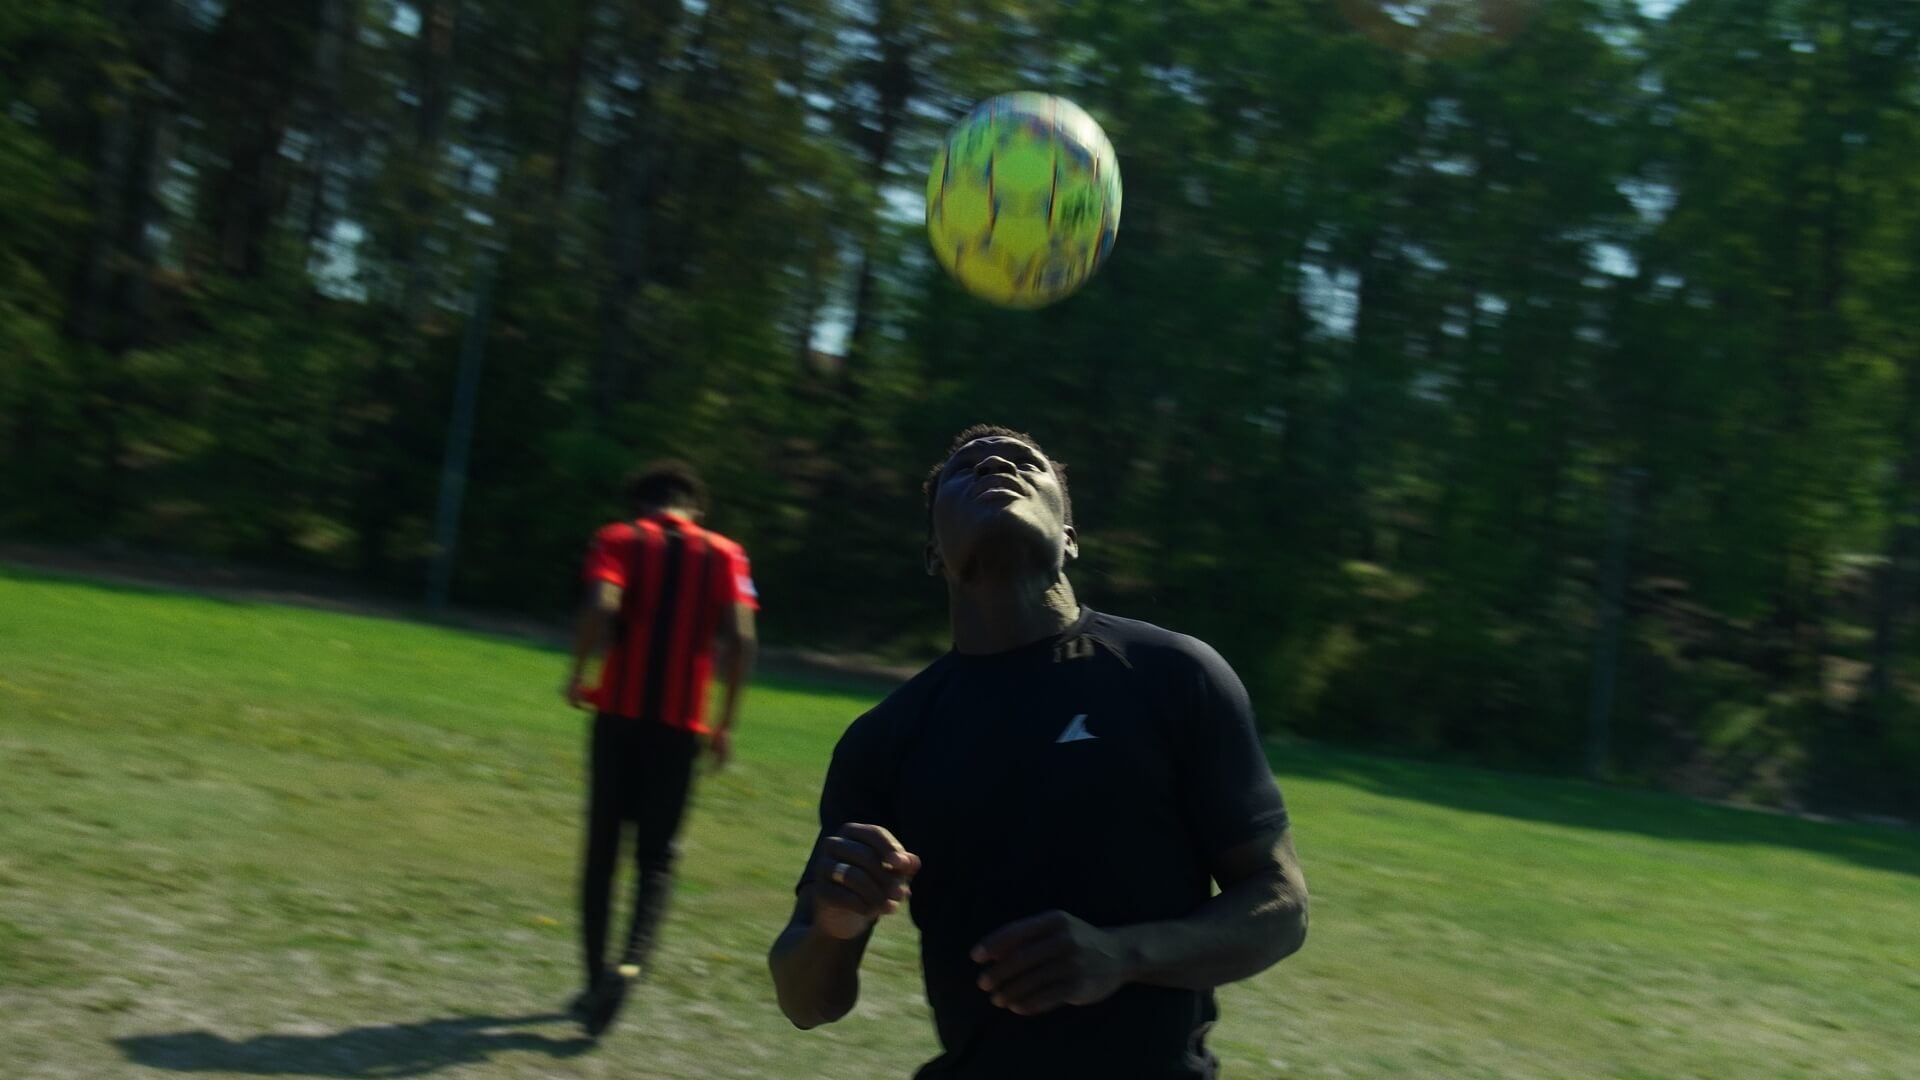 Ladda video: Energisk fotbollsfilm